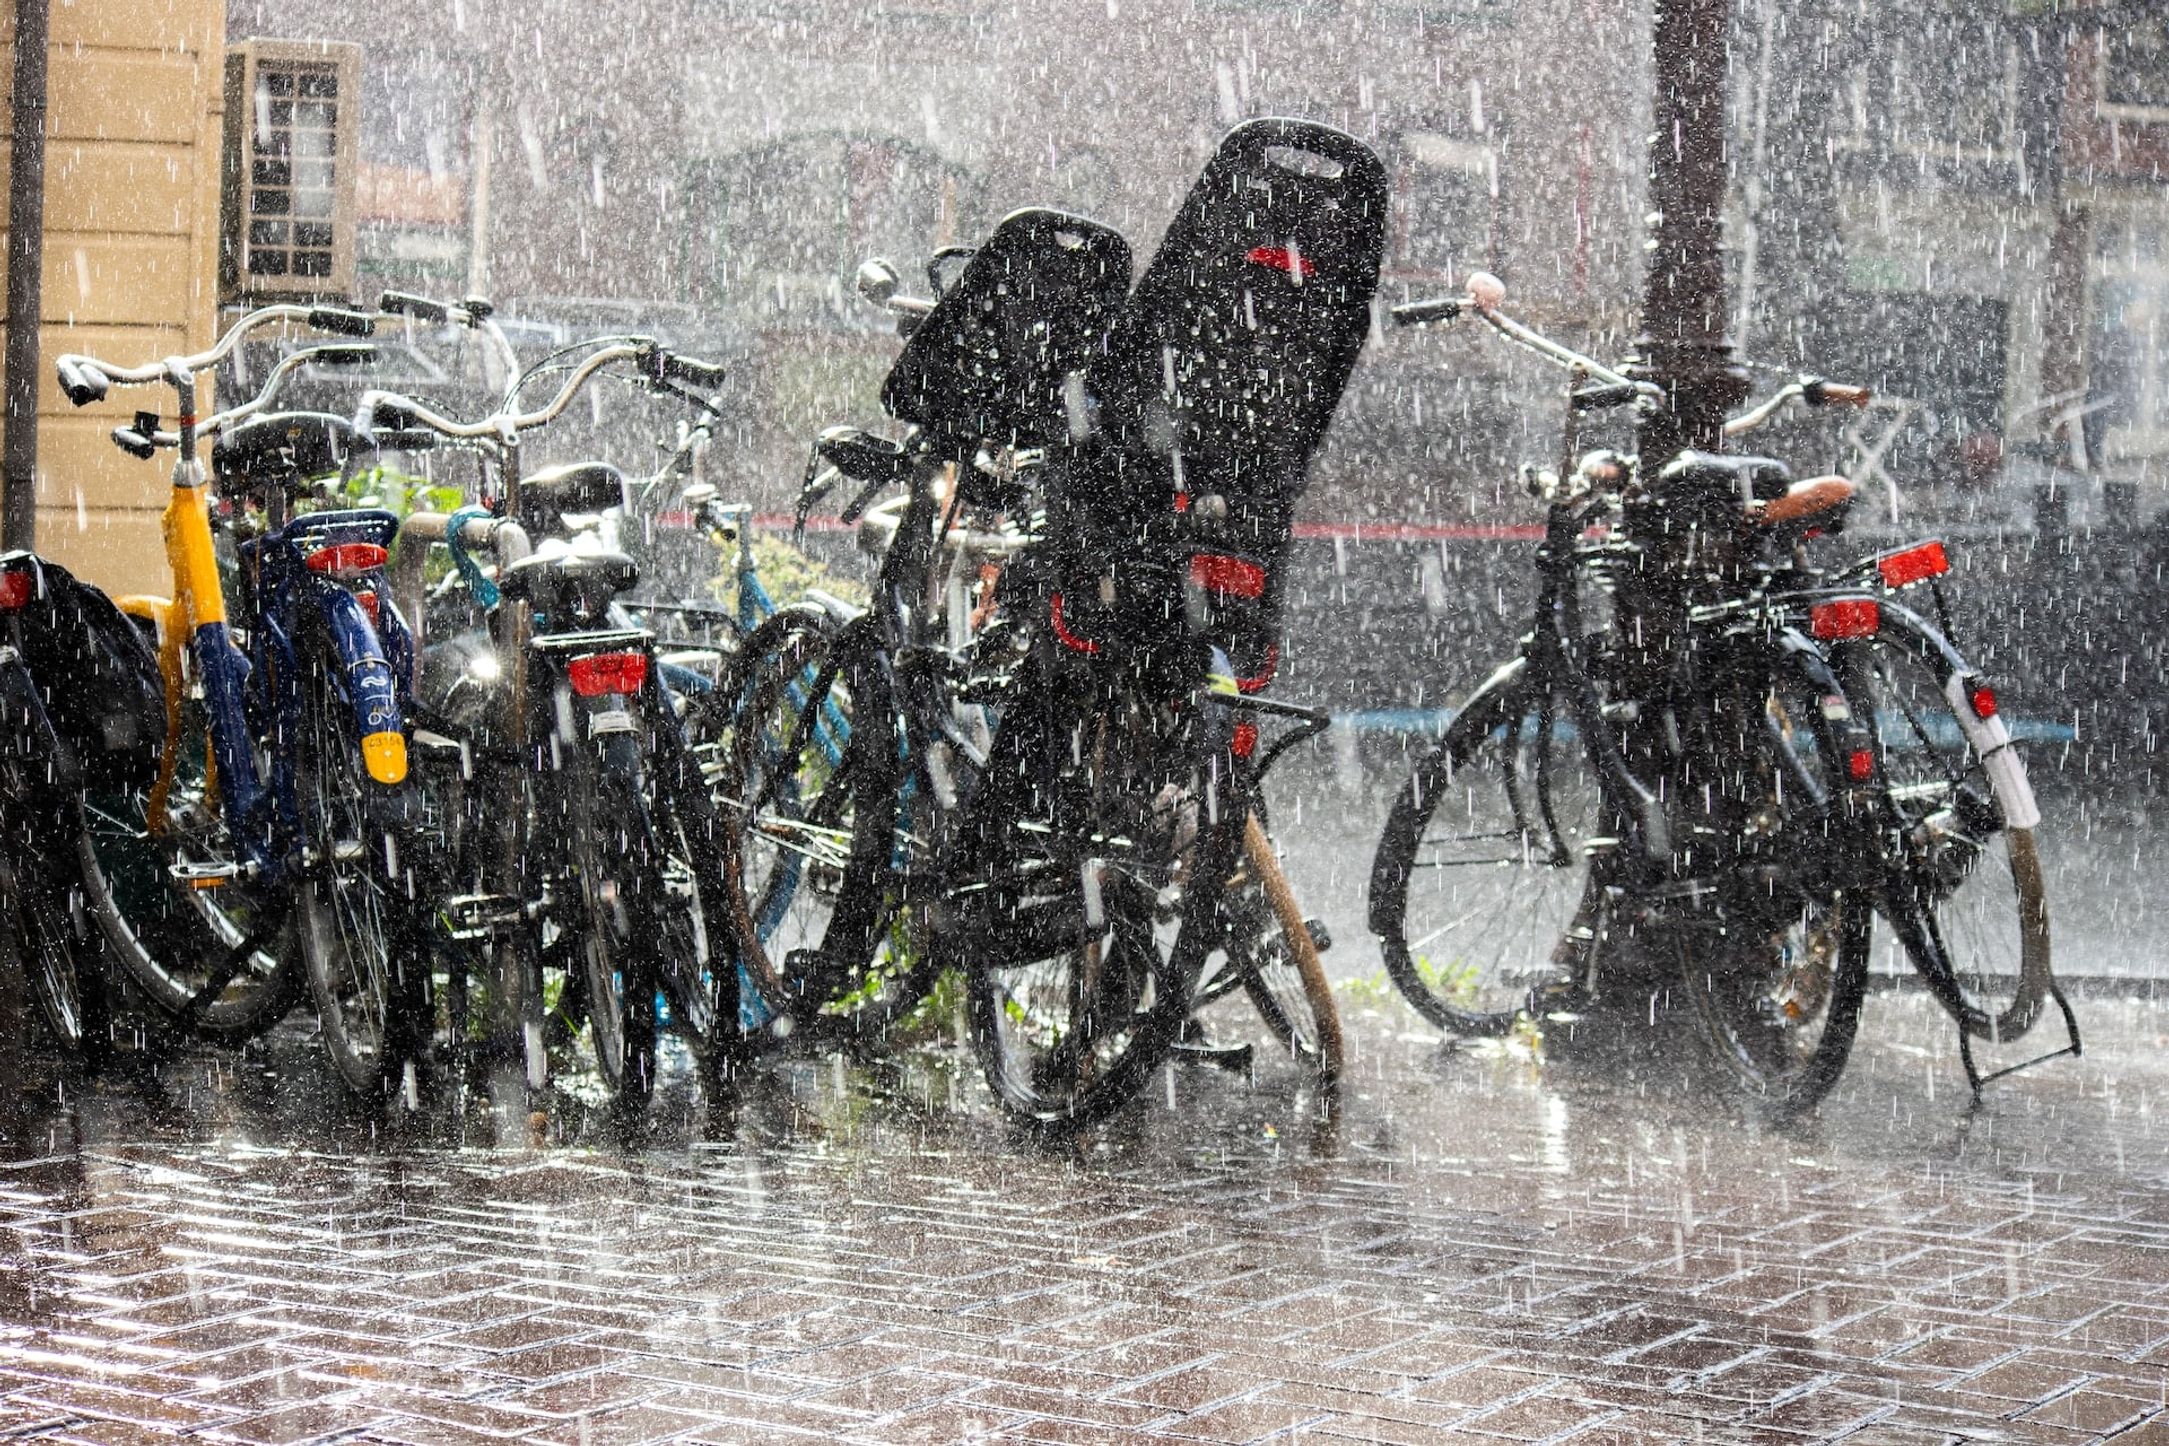 Bikes parking in the rain